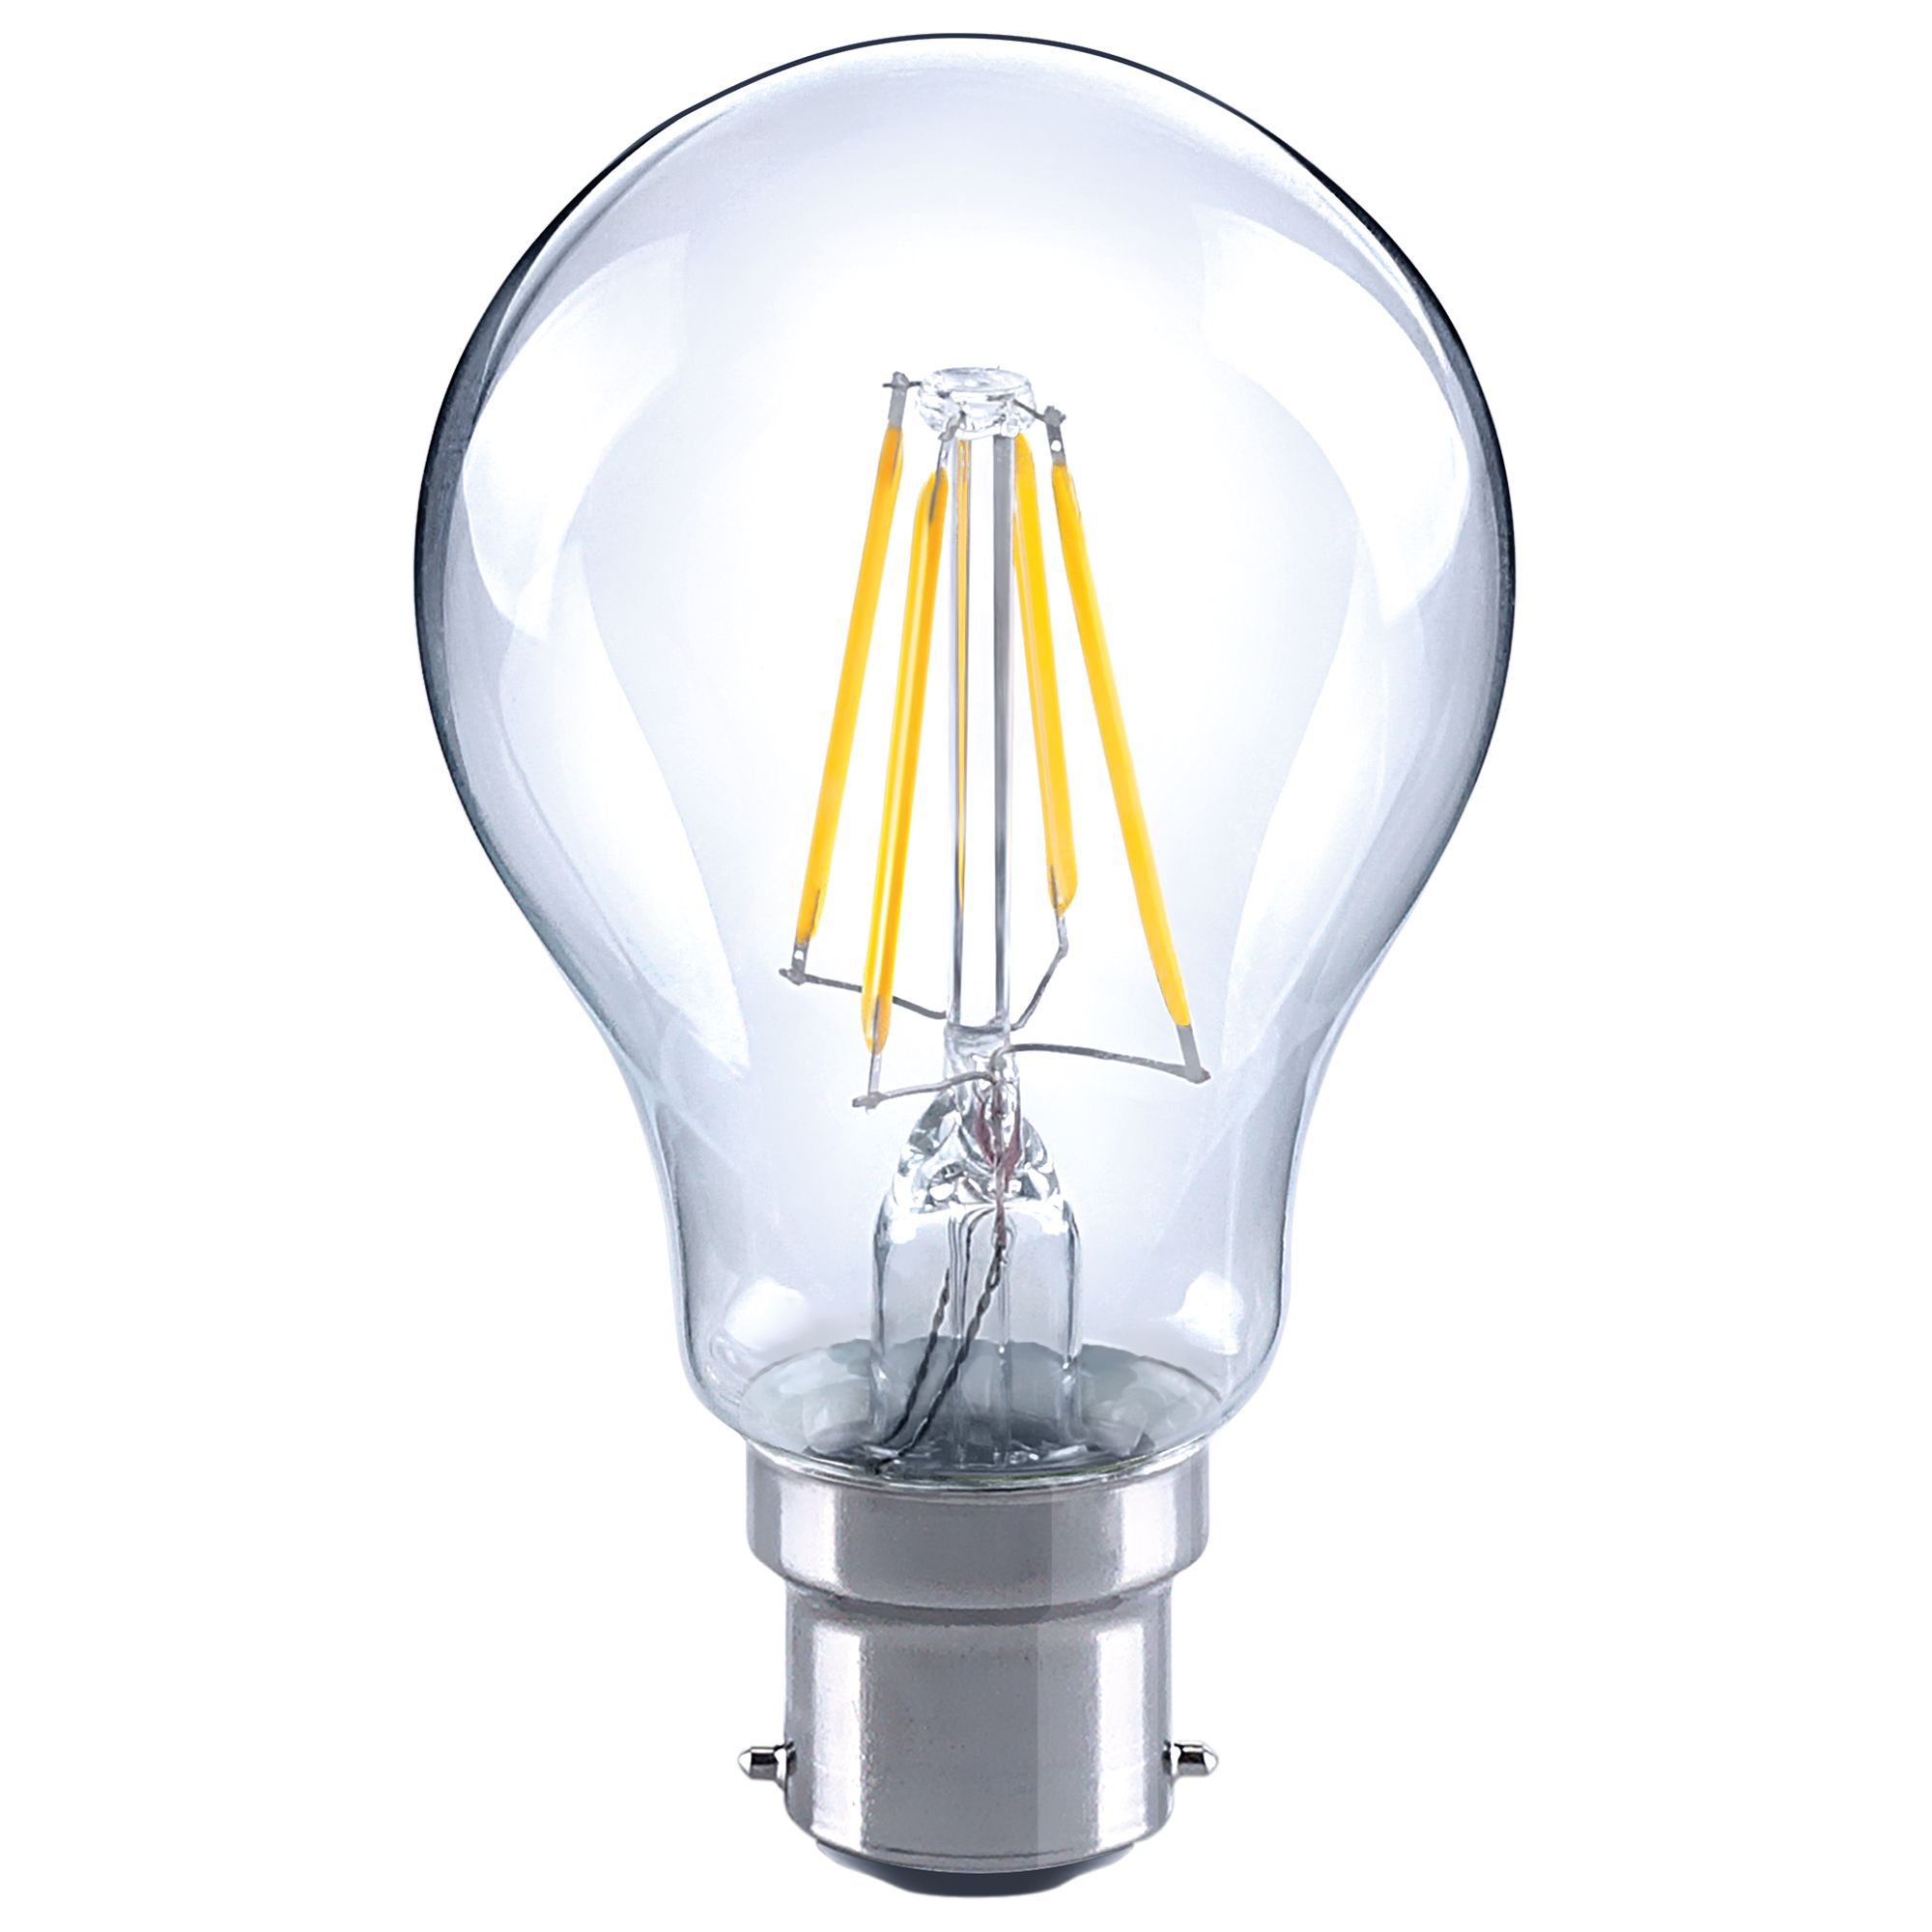 4x 15W Low Energy CFL GLS Light Bulb 2700K Warm White BC B22 Bayonet Lamp Globe